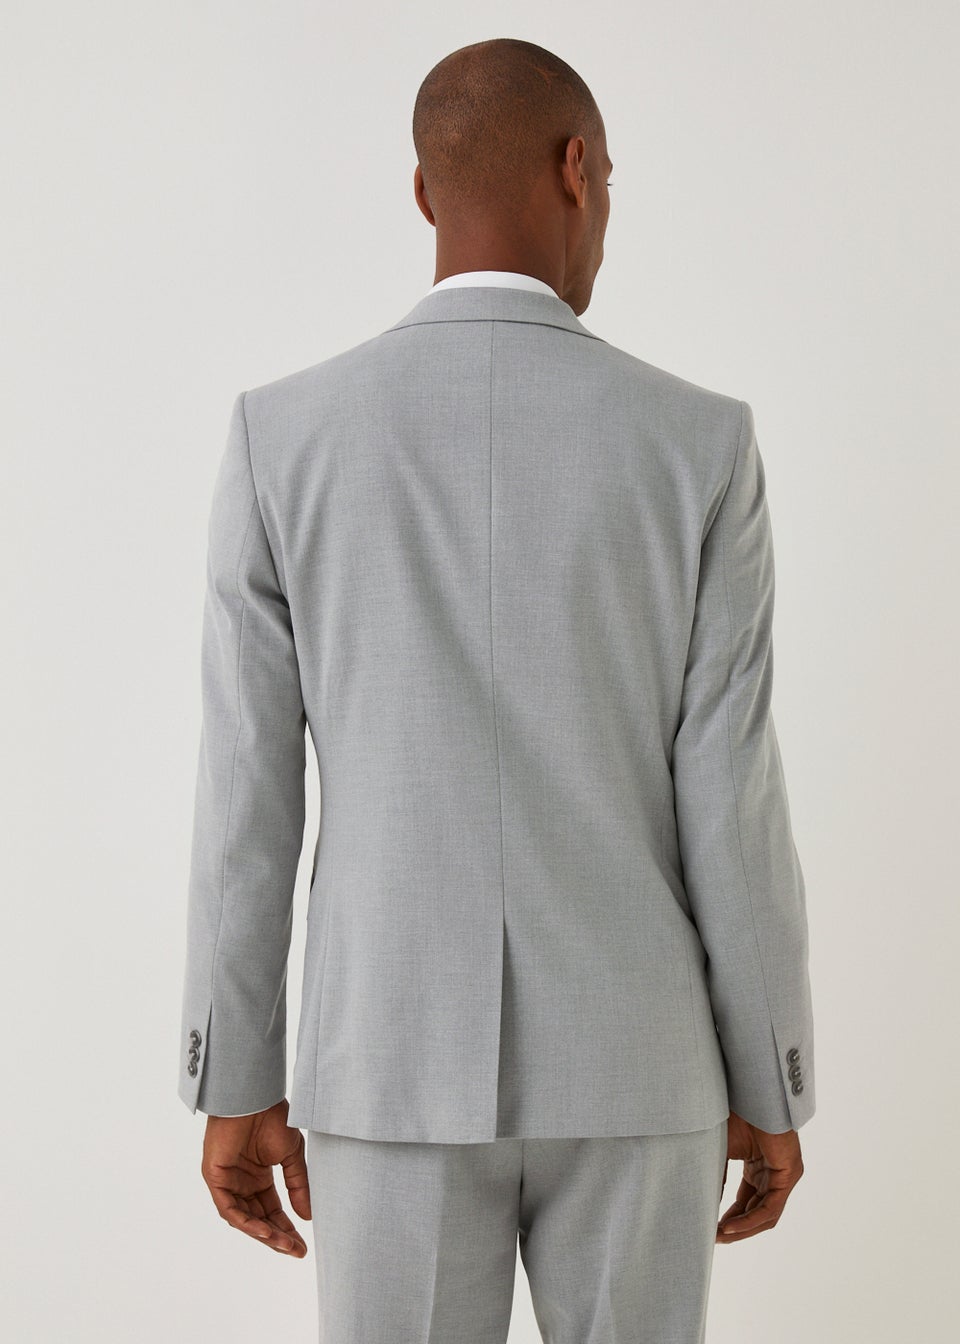 Taylor & Wright Lewis Grey Slim Fit Suit Jacket